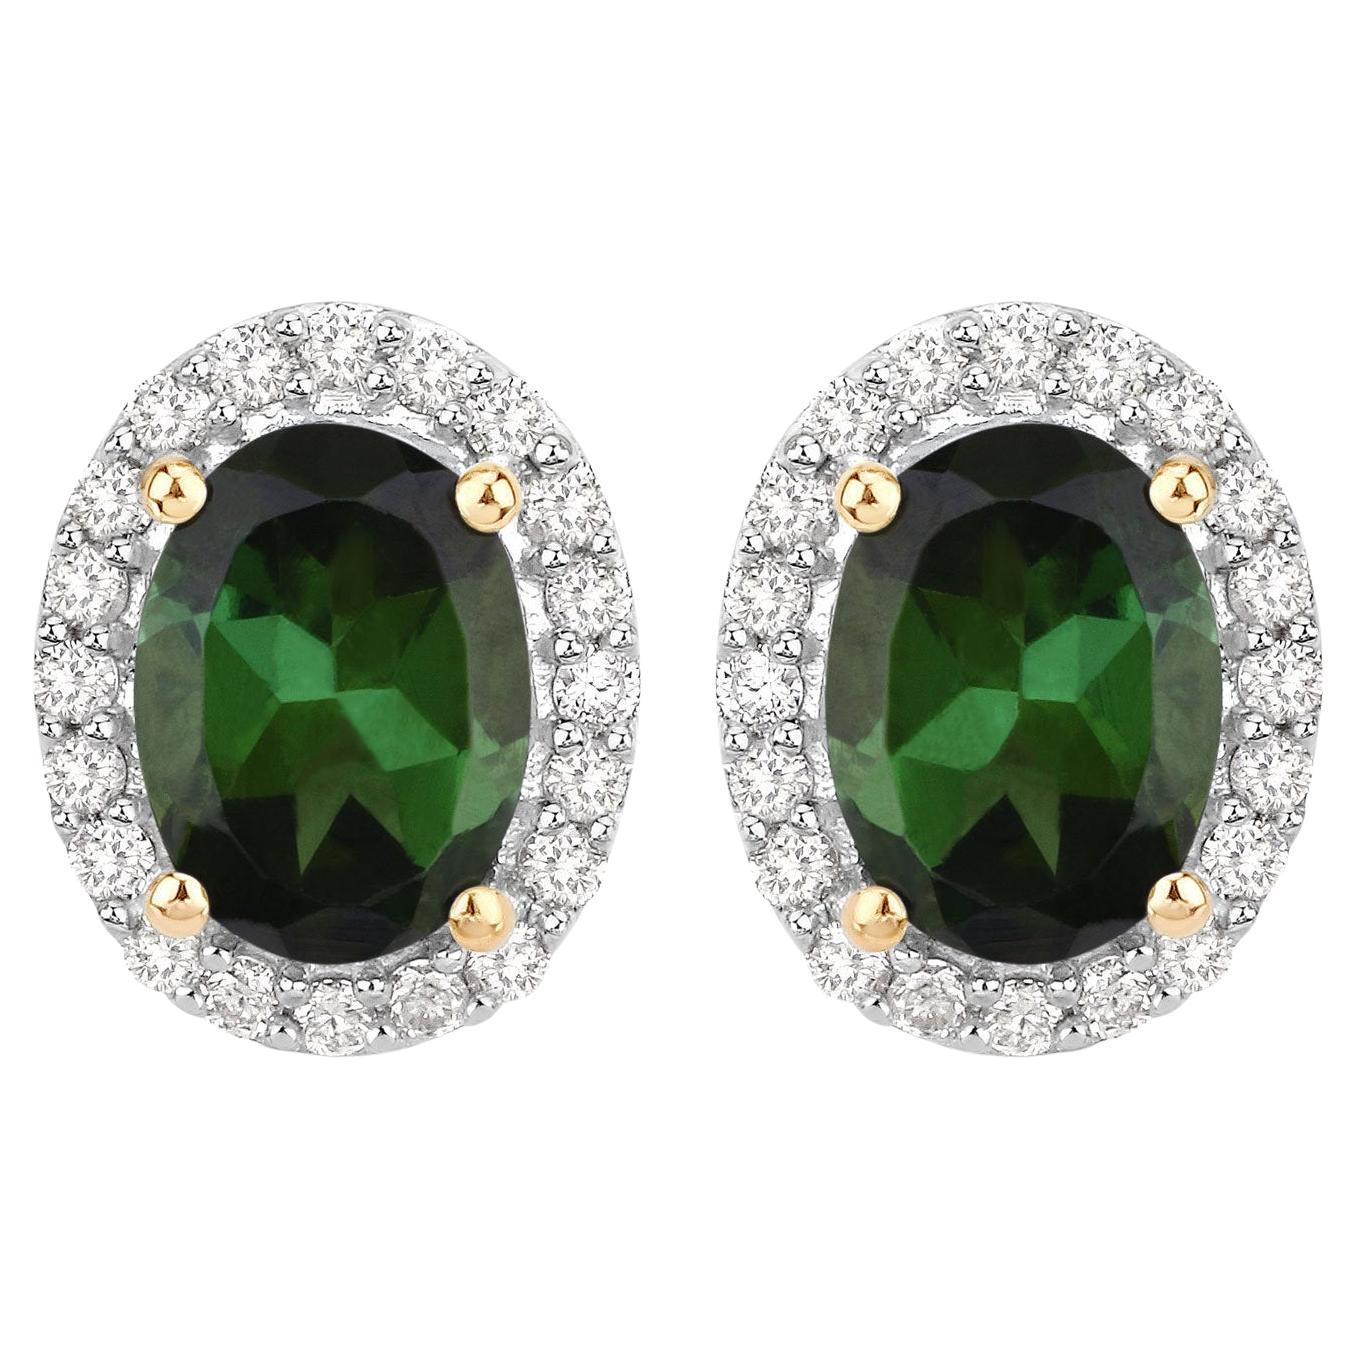 Natural Green Tourmaline and Diamond Halo Earrings 2 Carats 14k Yellow Gold